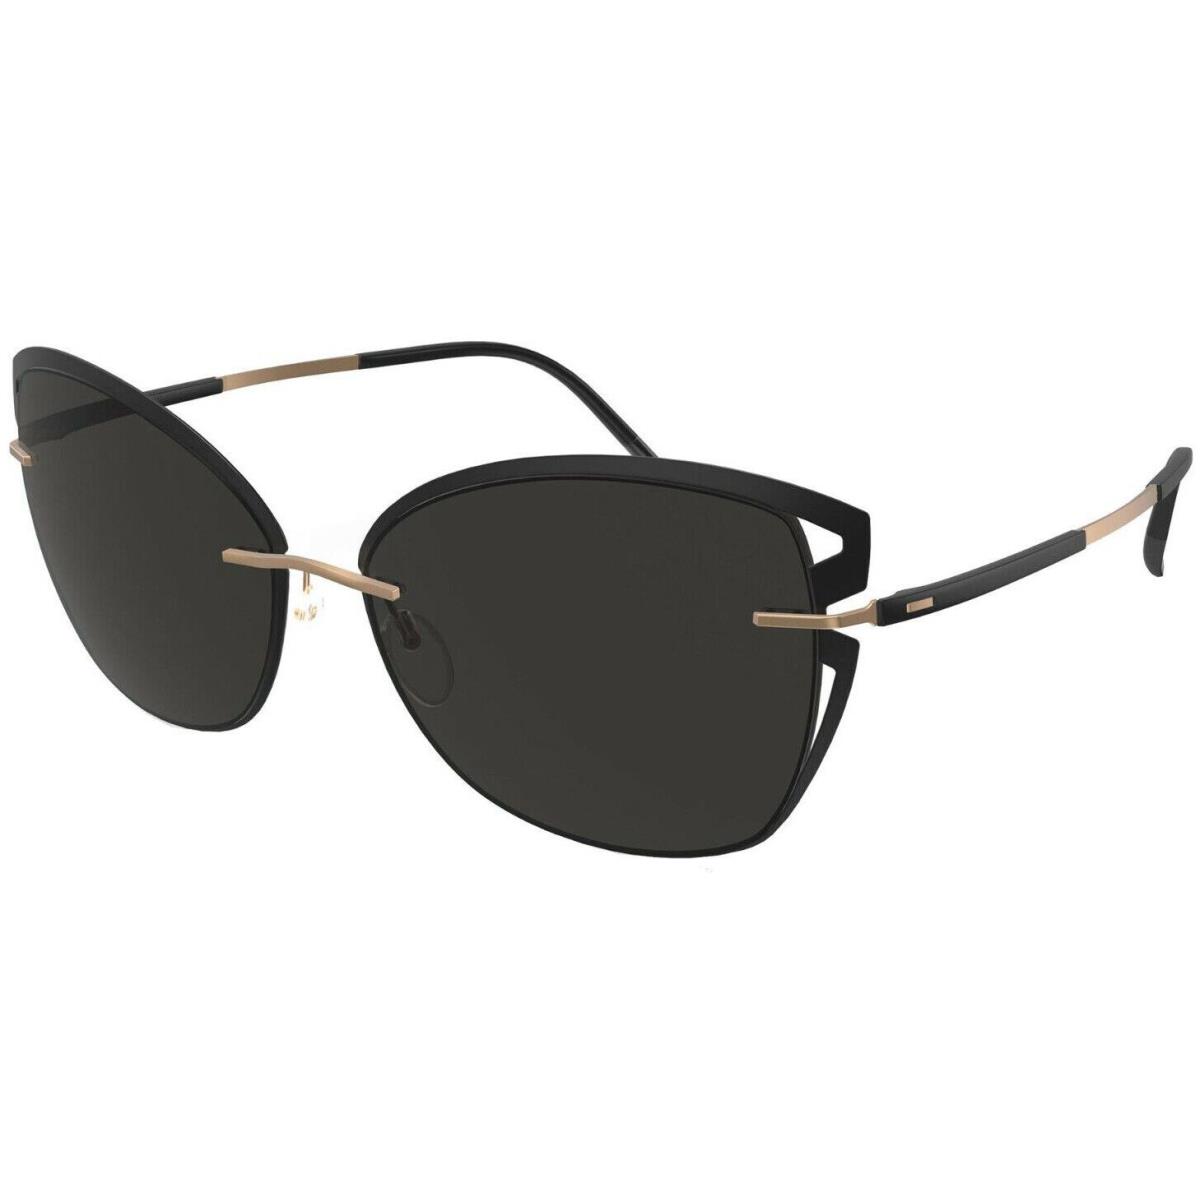 Silhouette Sunglasses Accent Shades 58-15-130 Black Gold Polarized 8179/75-9030